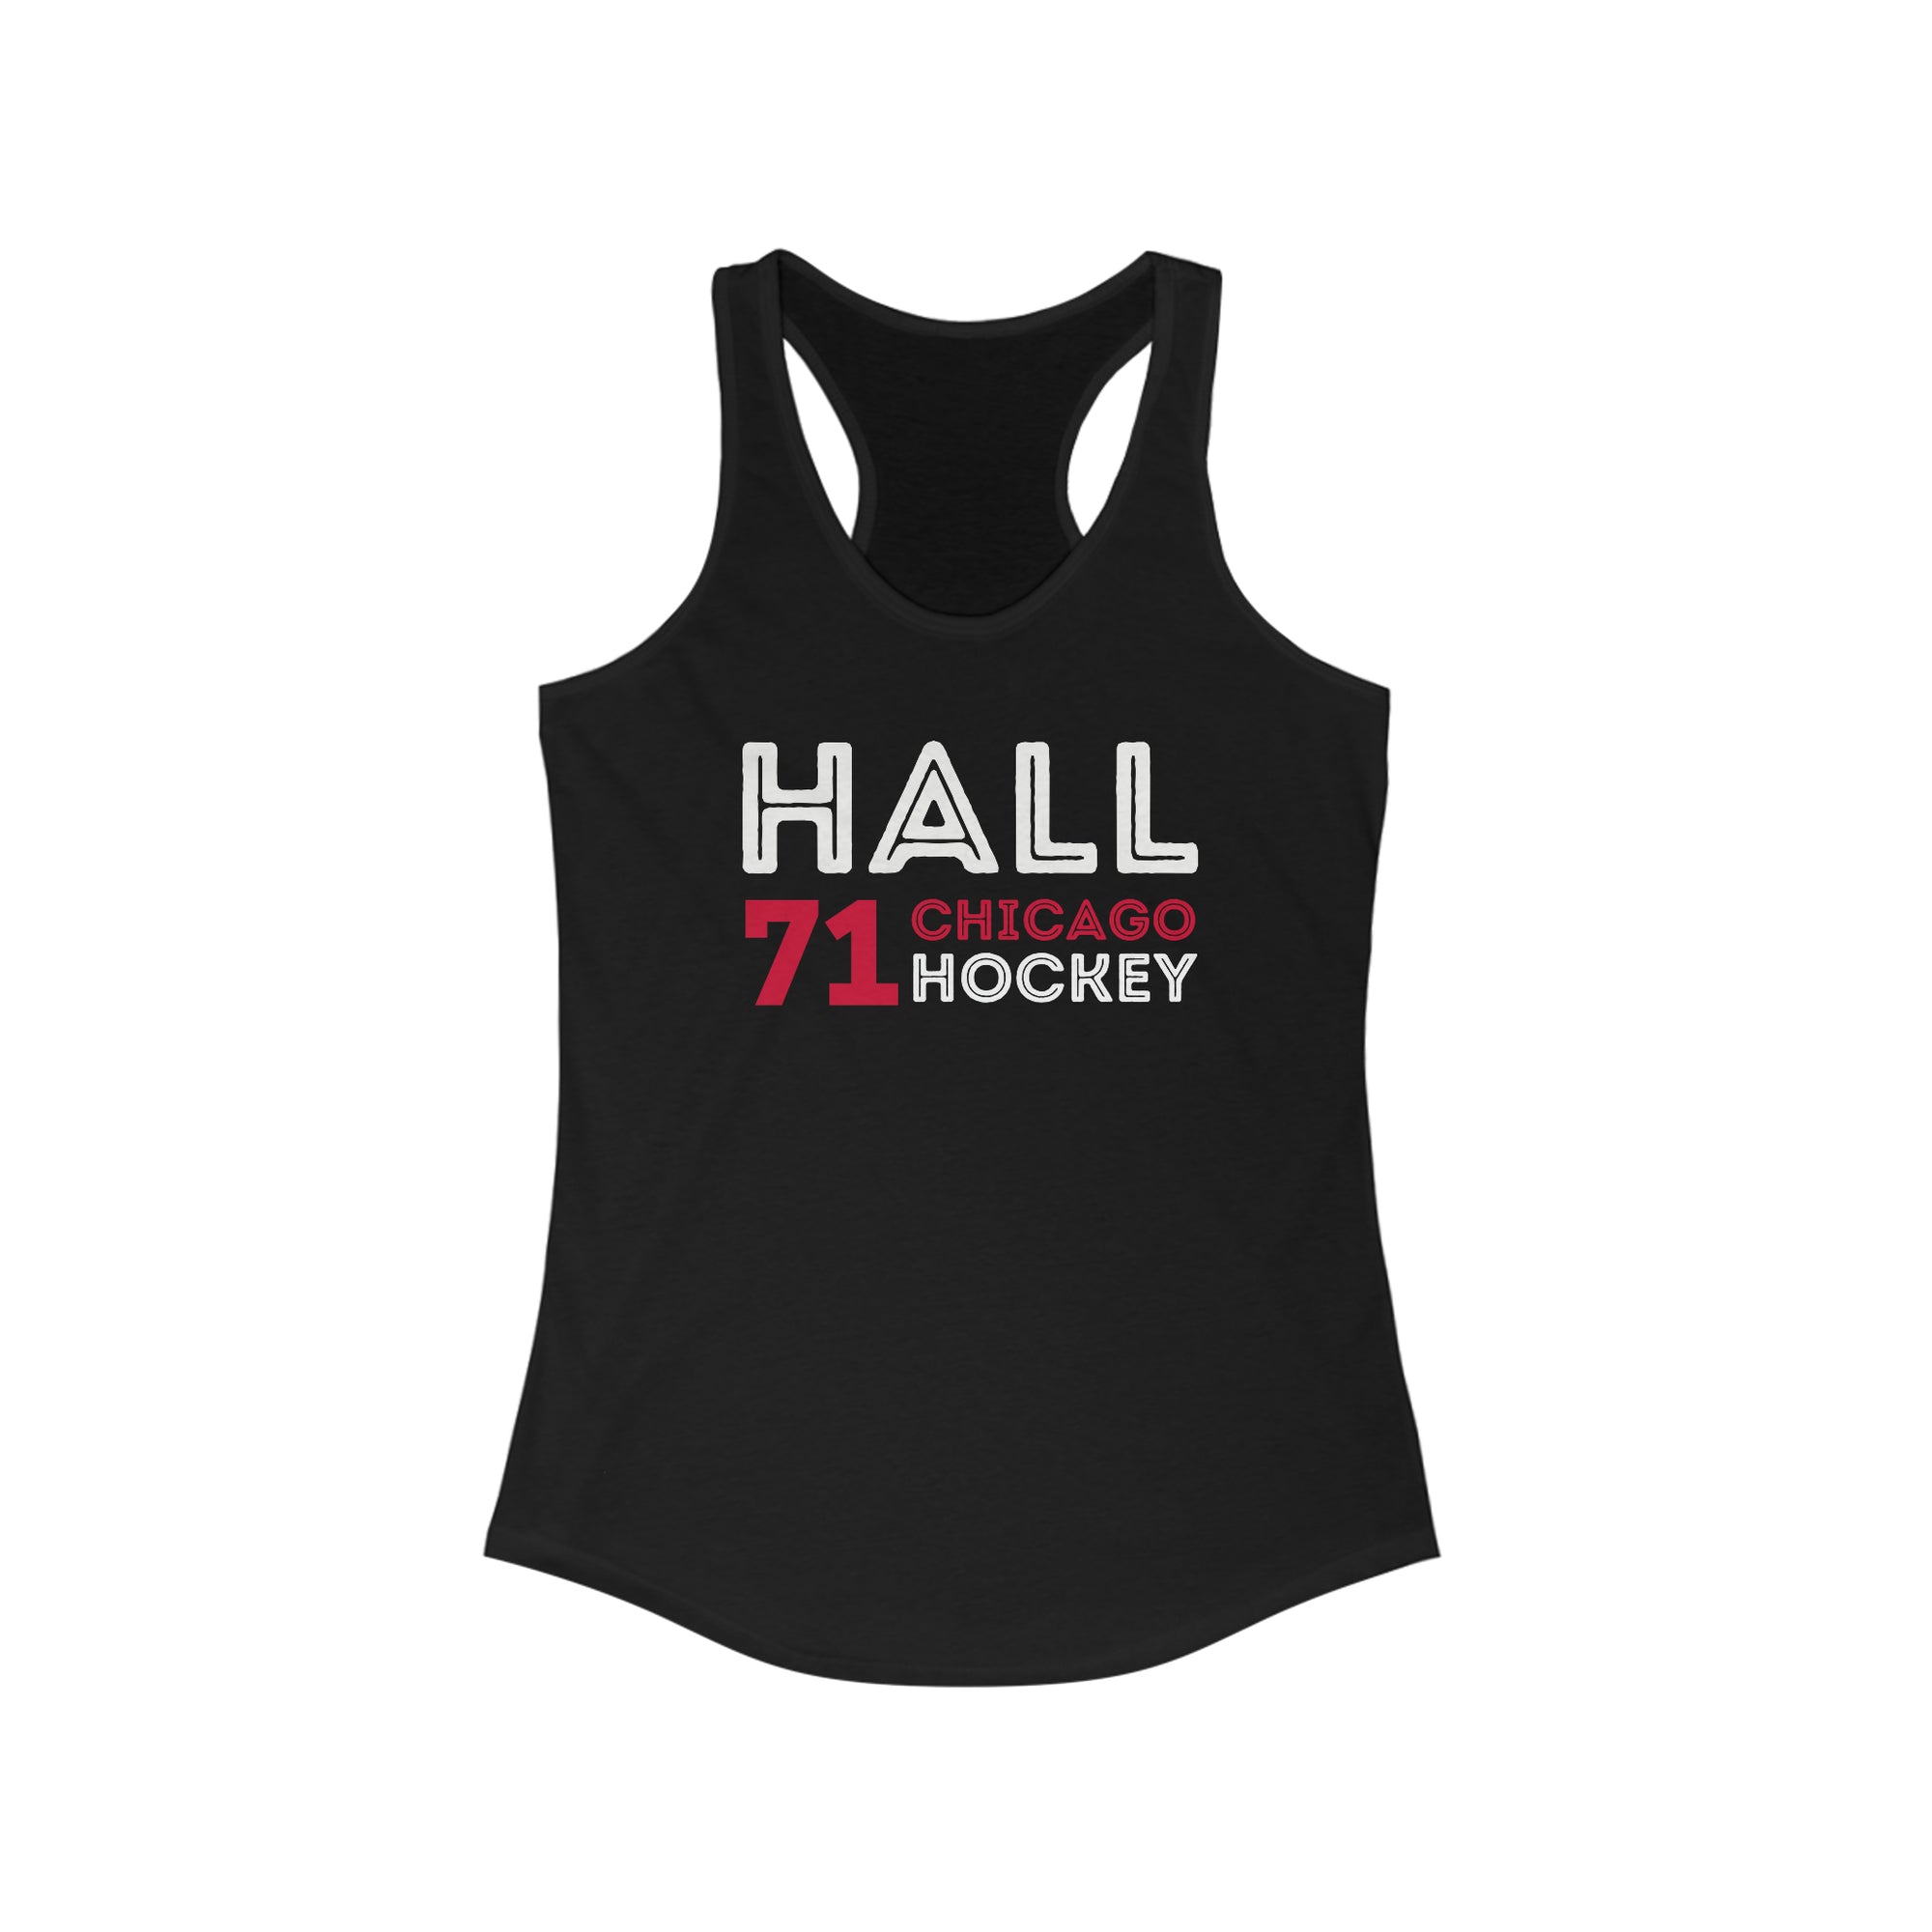 Hall 71 Chicago Hockey Grafitti Wall Design Women's Ideal Racerback Tank Top